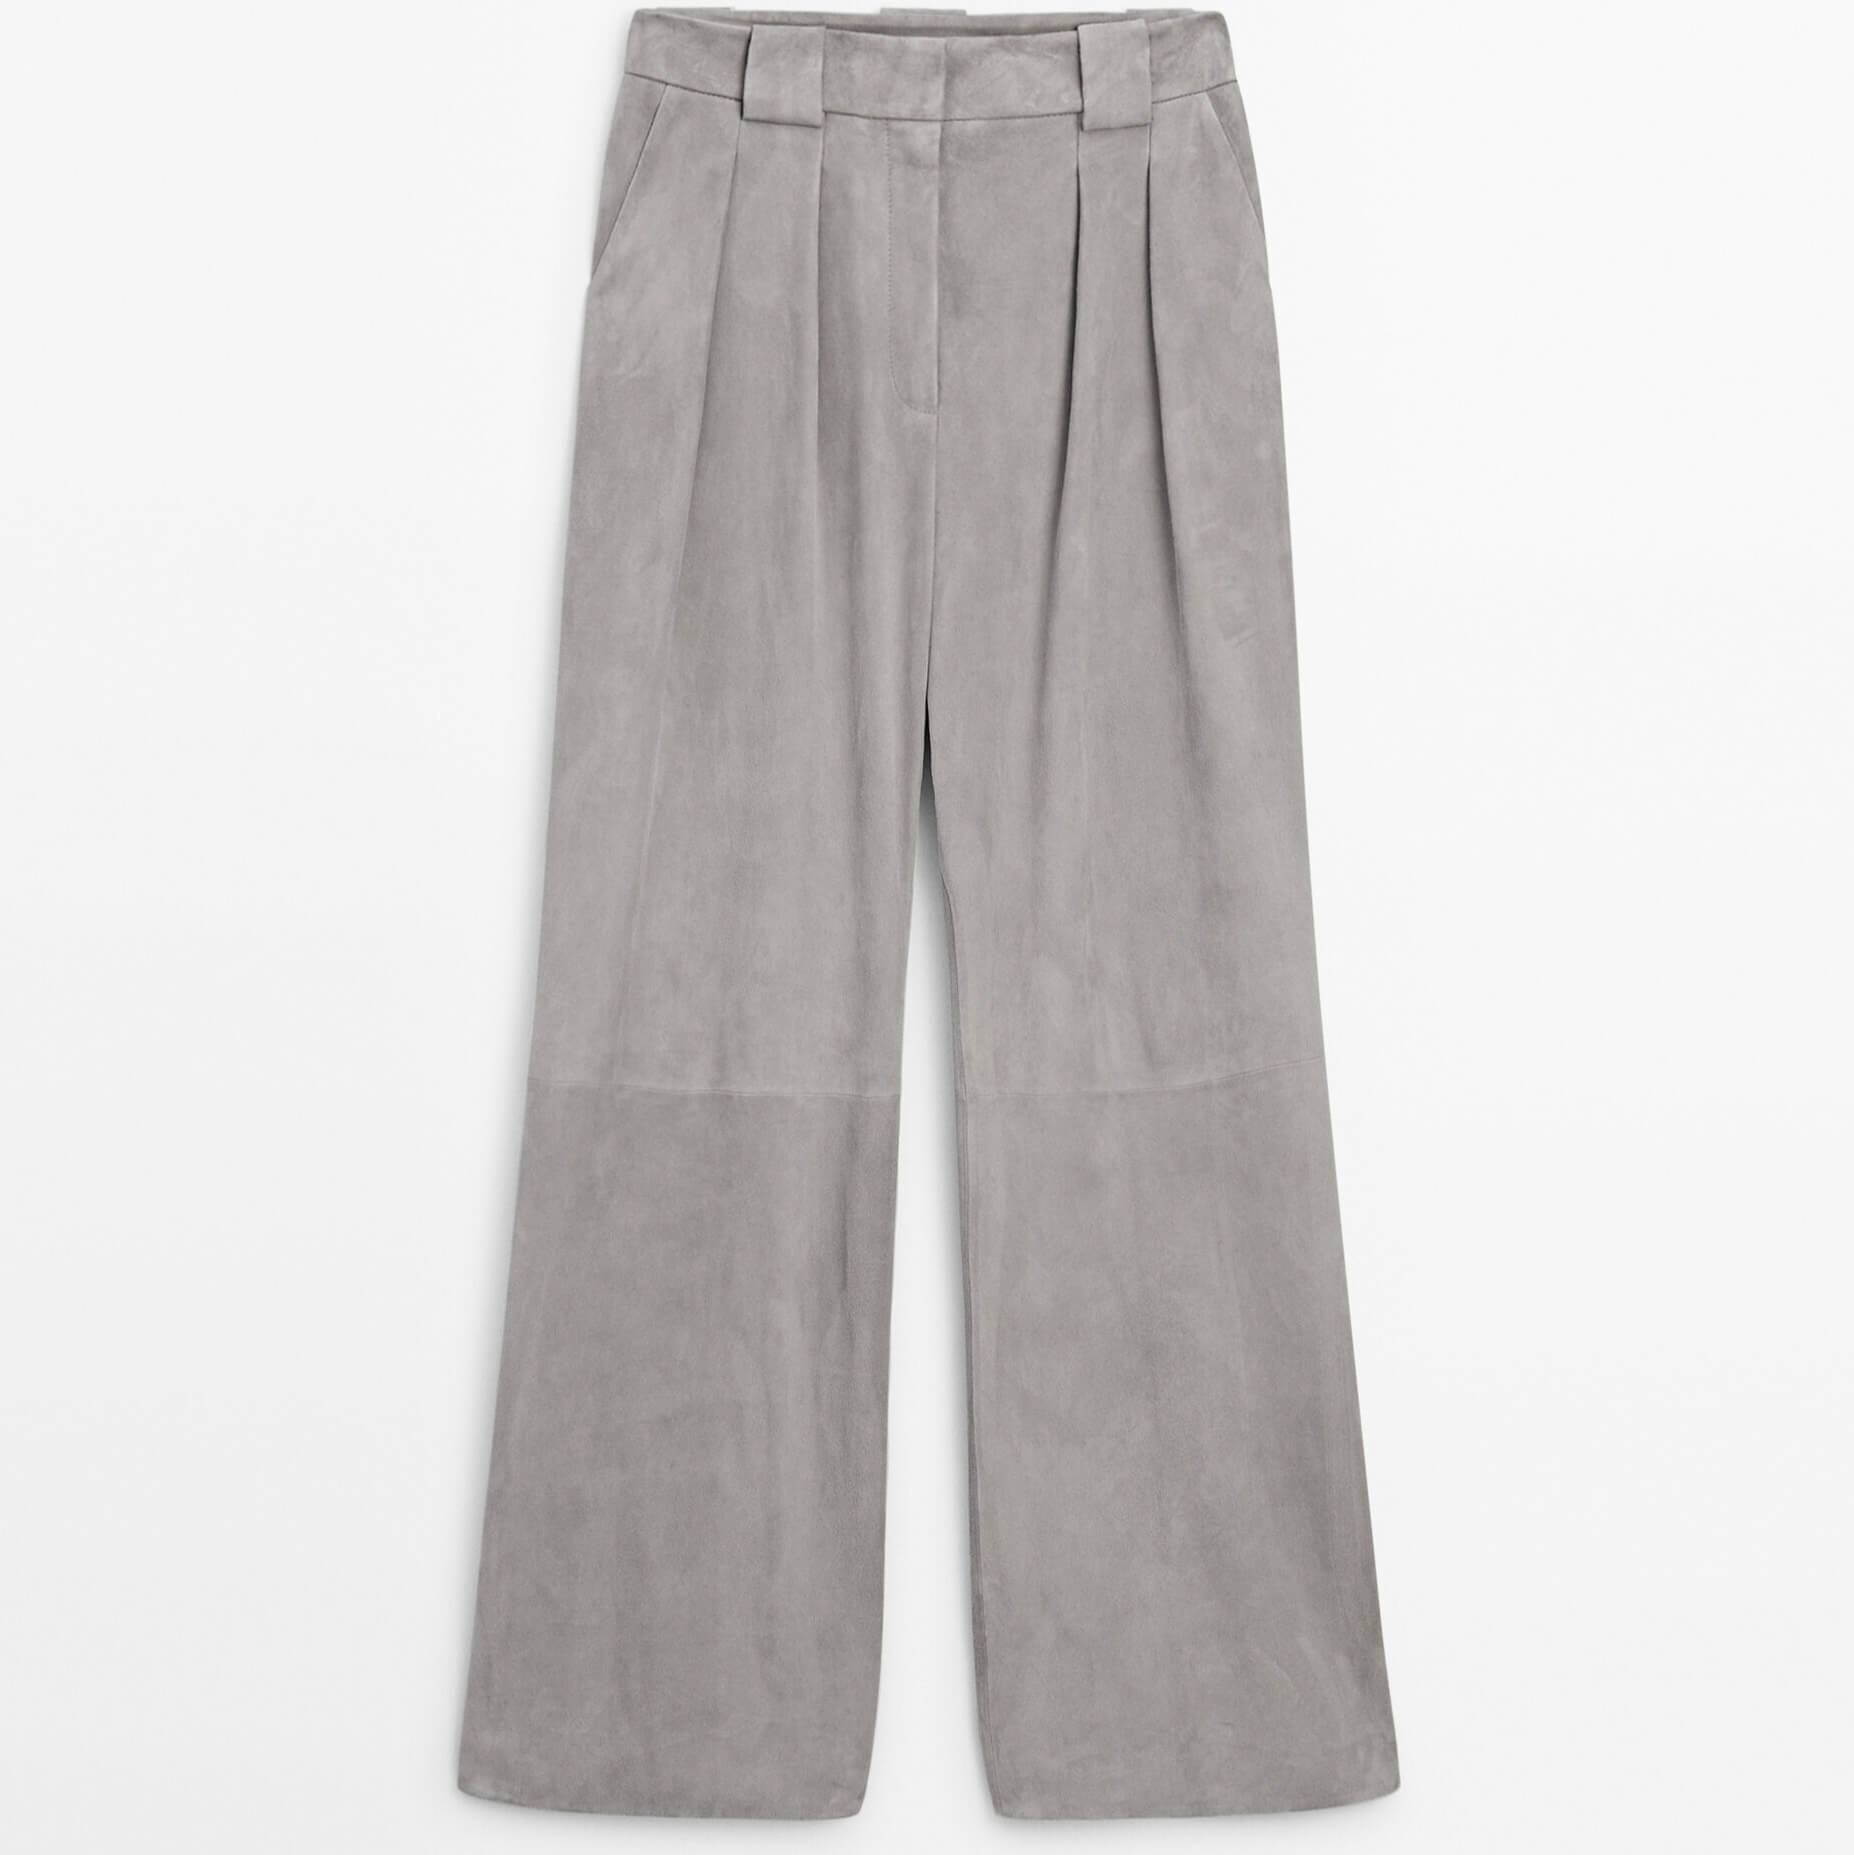 Брюки Massimo Dutti Suede Leather Wide-leg Darted Studio, серый брюки massimo dutti wide leg cotton blend studio коричневый